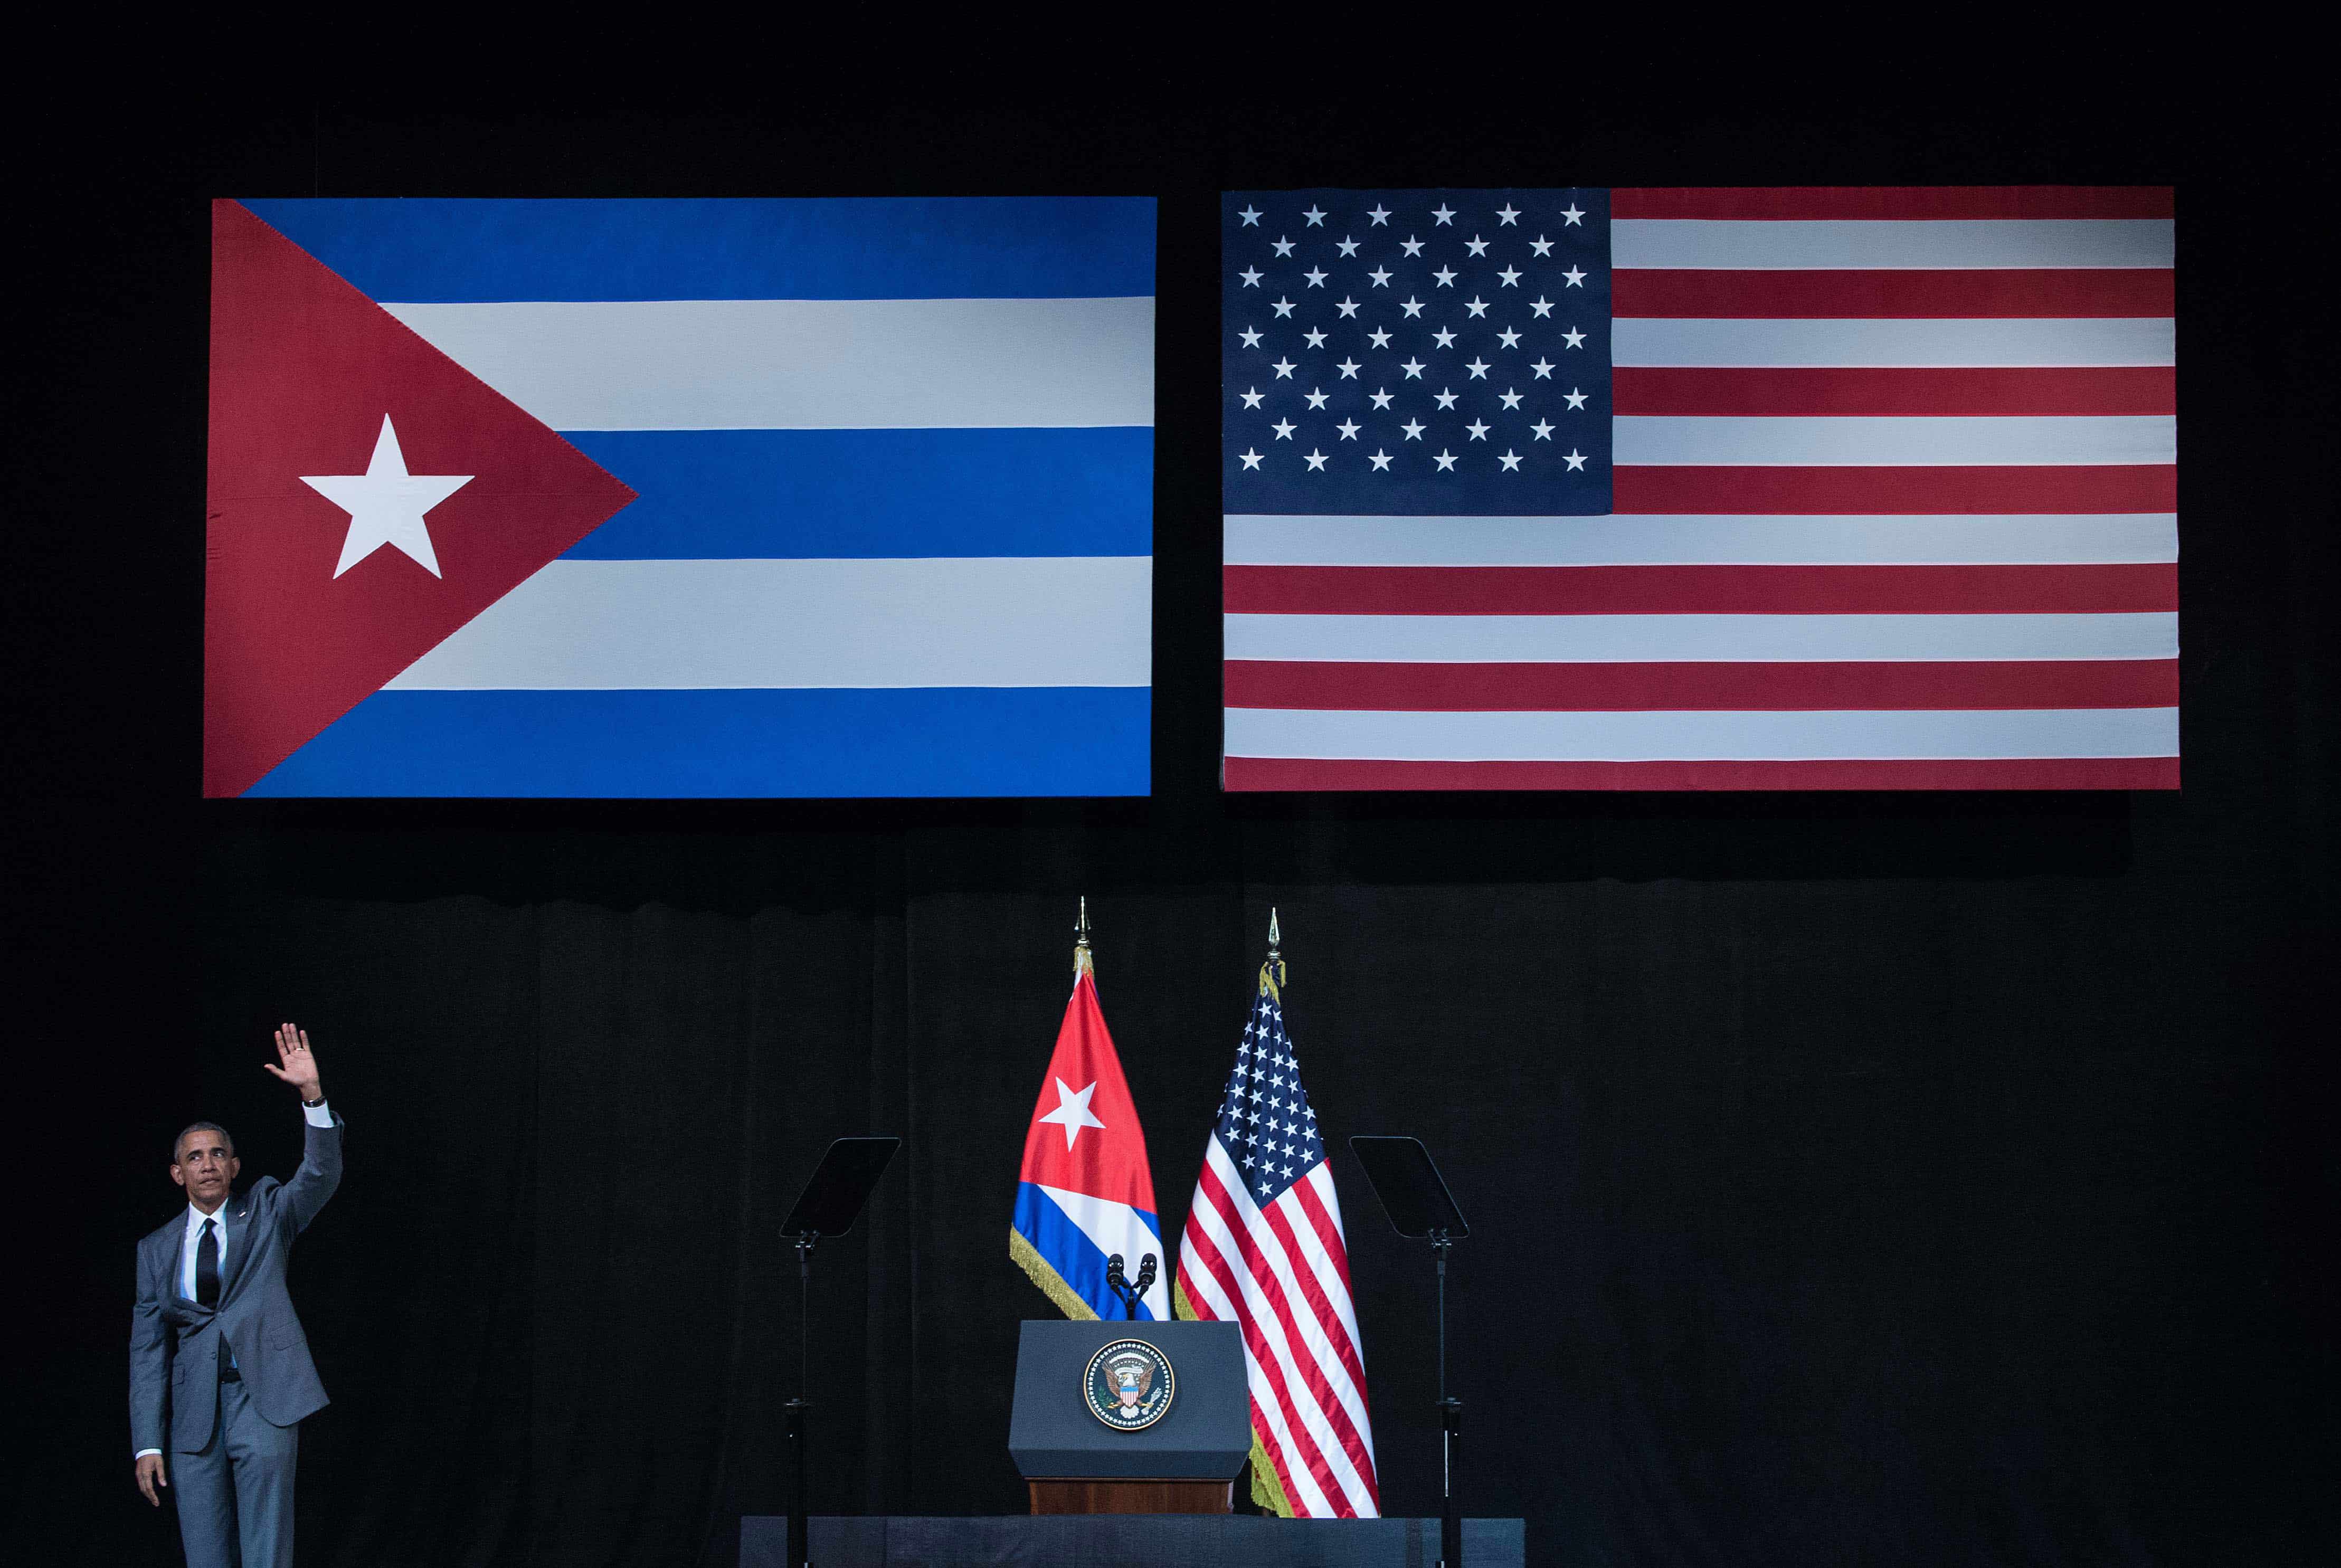 Obama in Cuba | speech